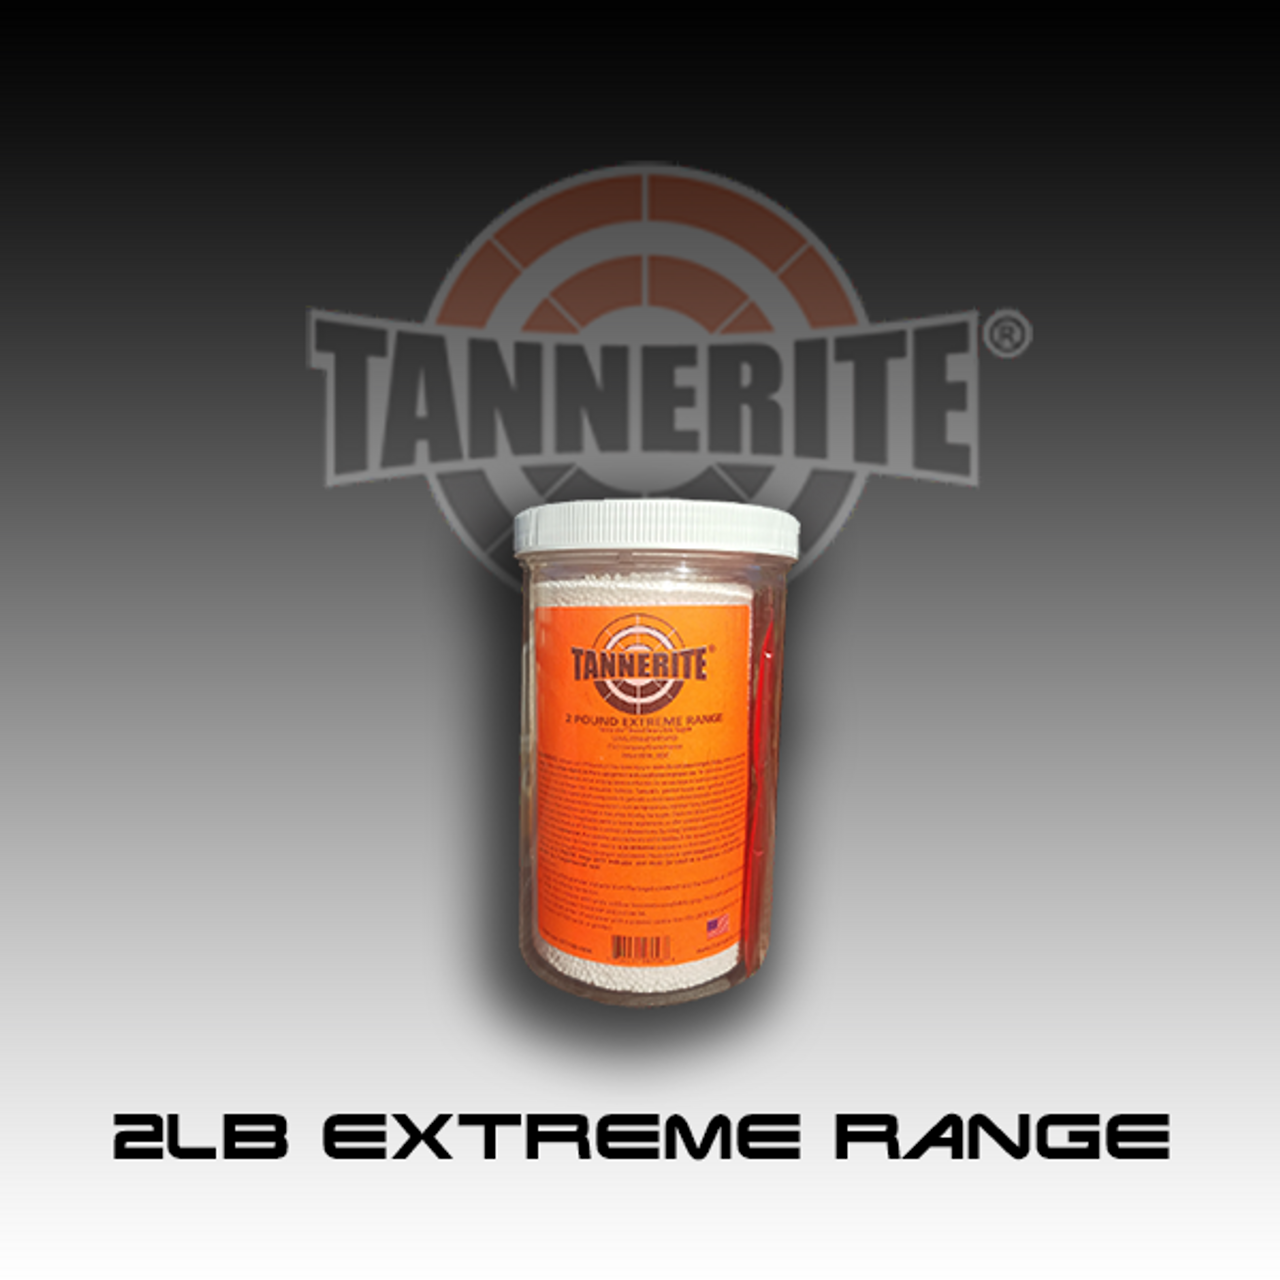 Tannerite 2 Pound Extreme Range